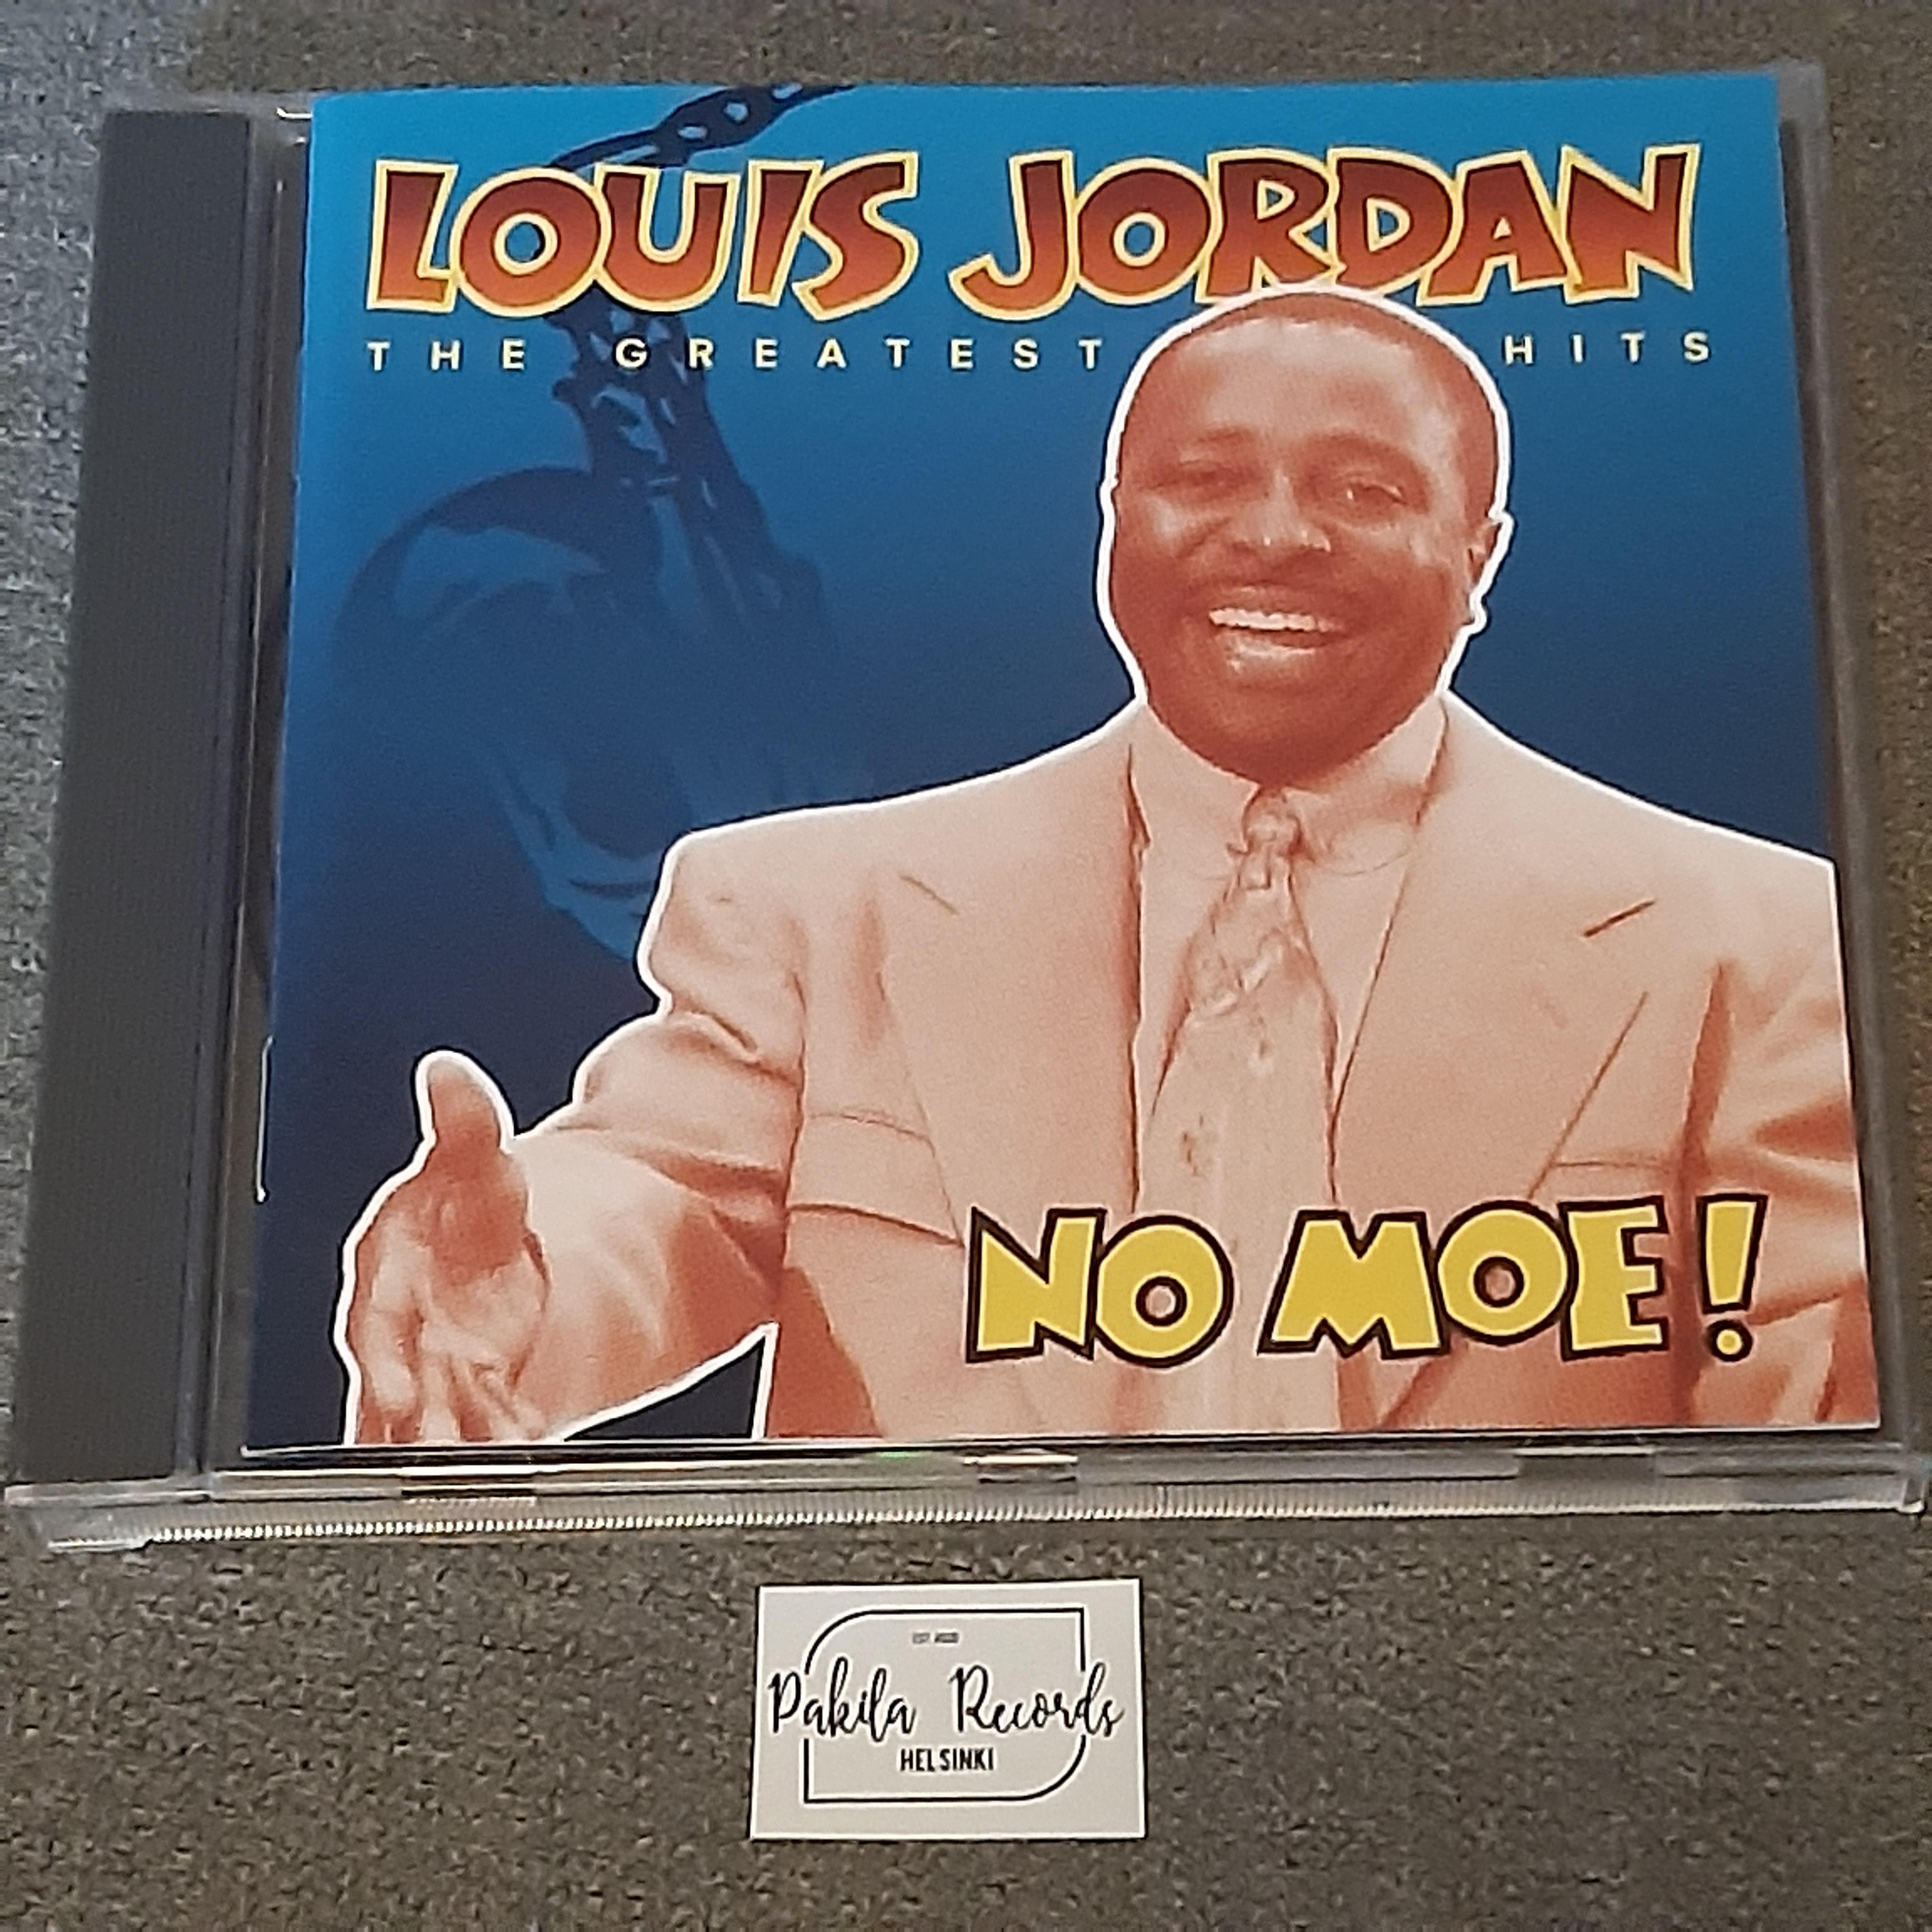 Louis Jordan - The Greatest Hits, No Moe! - CD (käytetty)